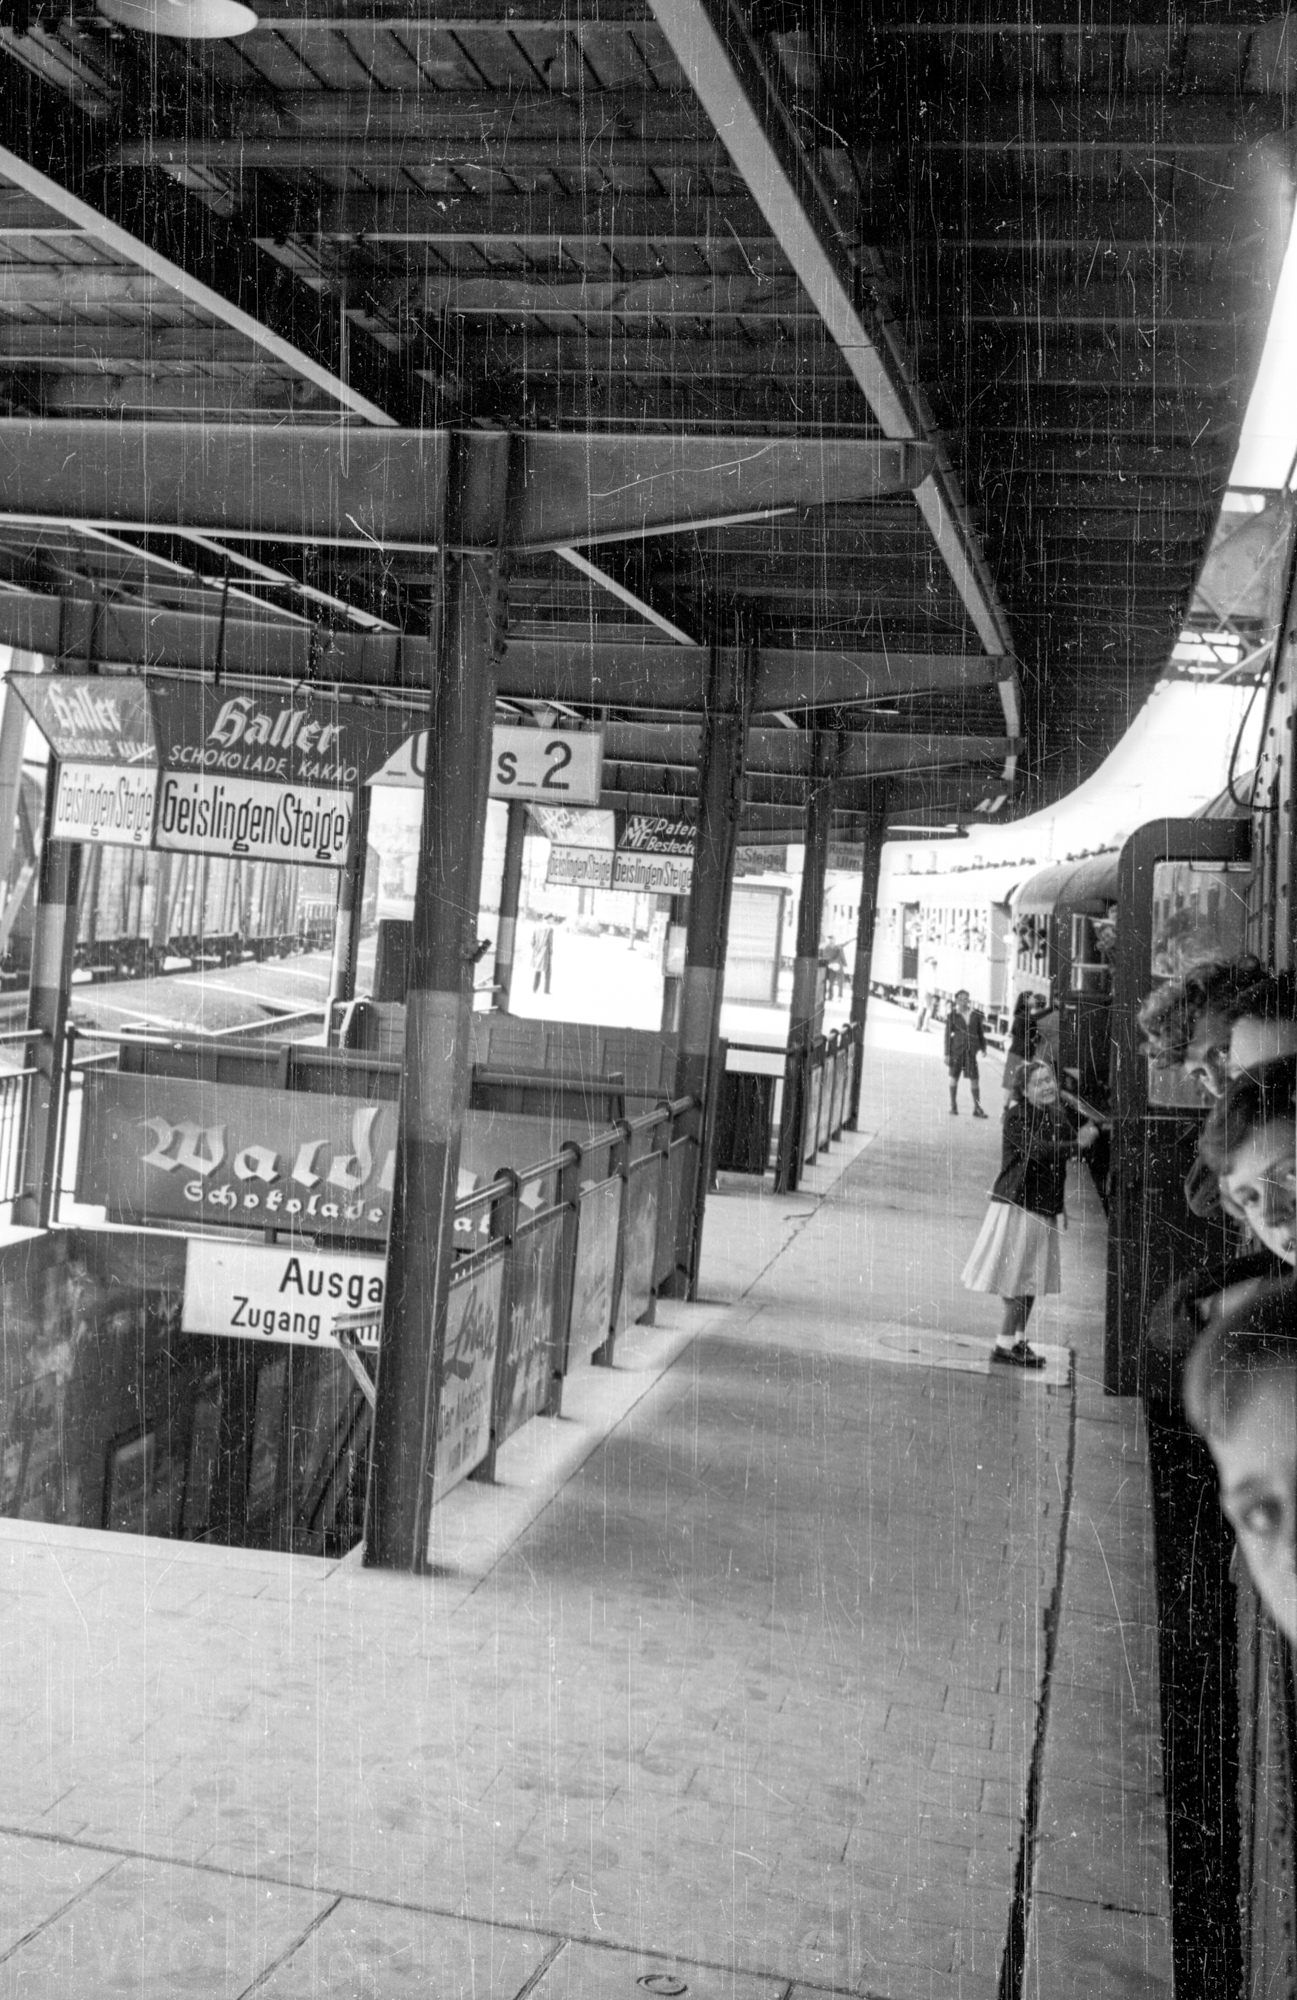 1951: Geislingen/Steige Railway Station